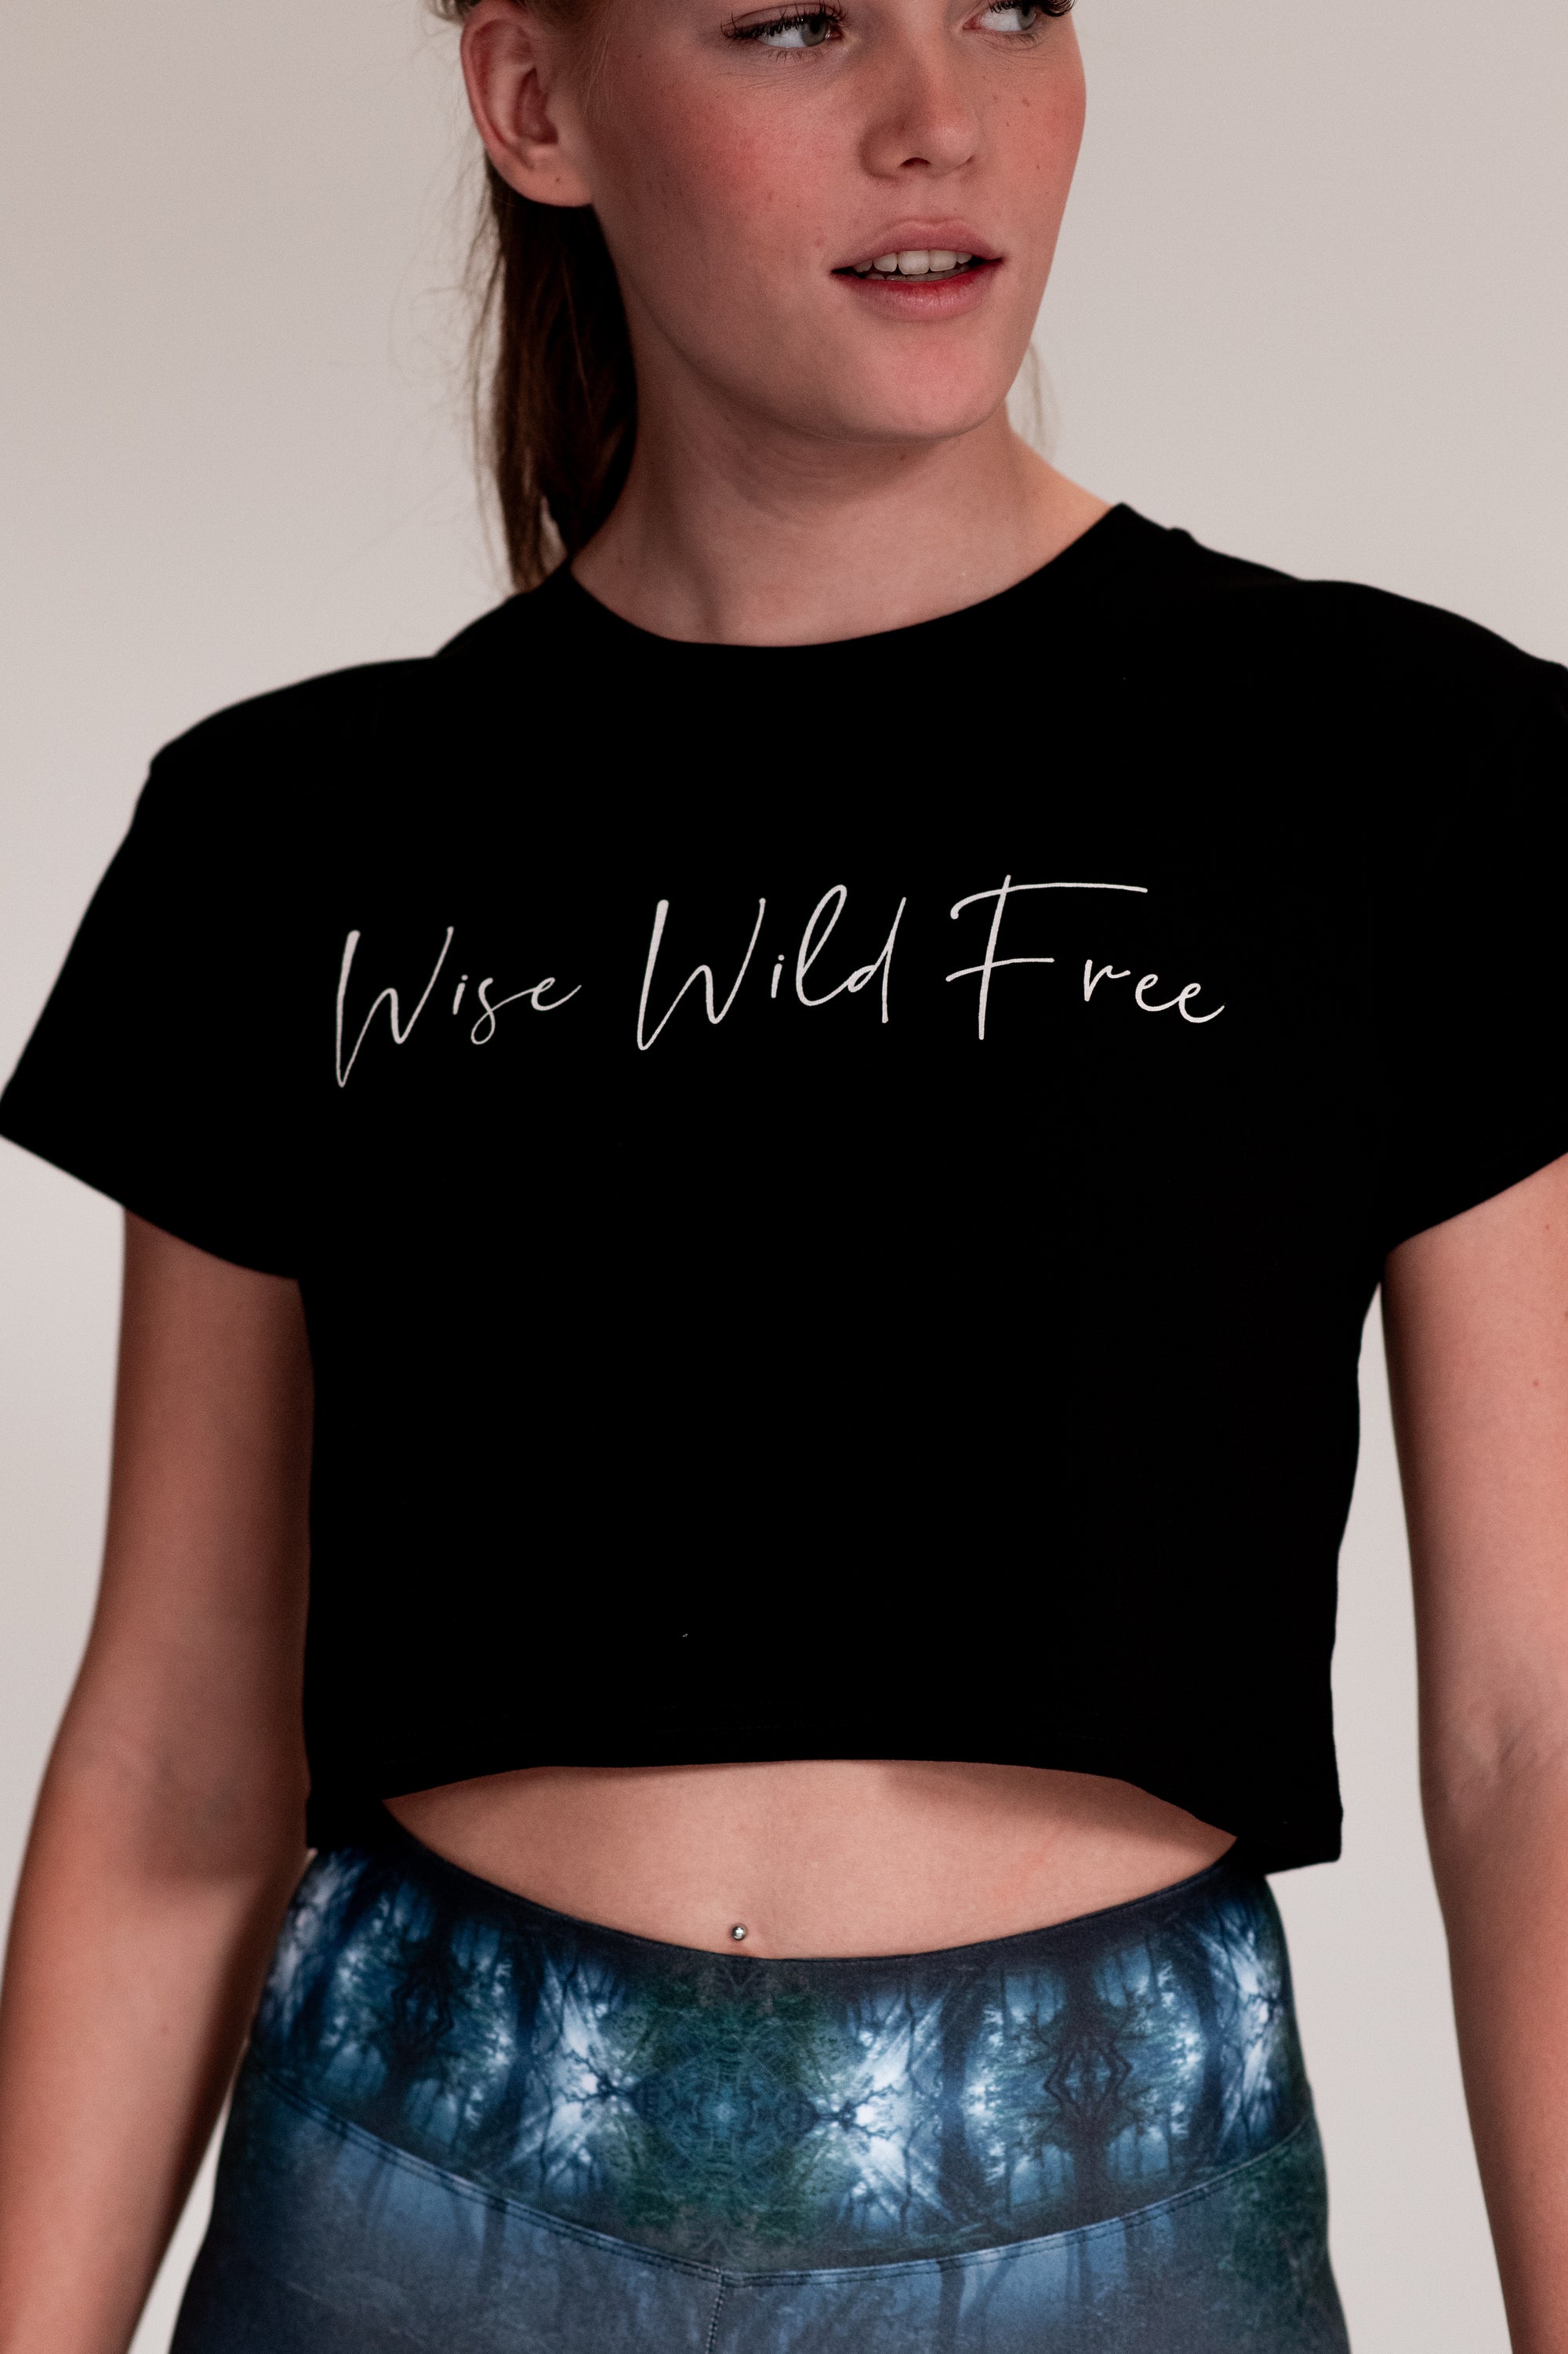 Wise Wild Free